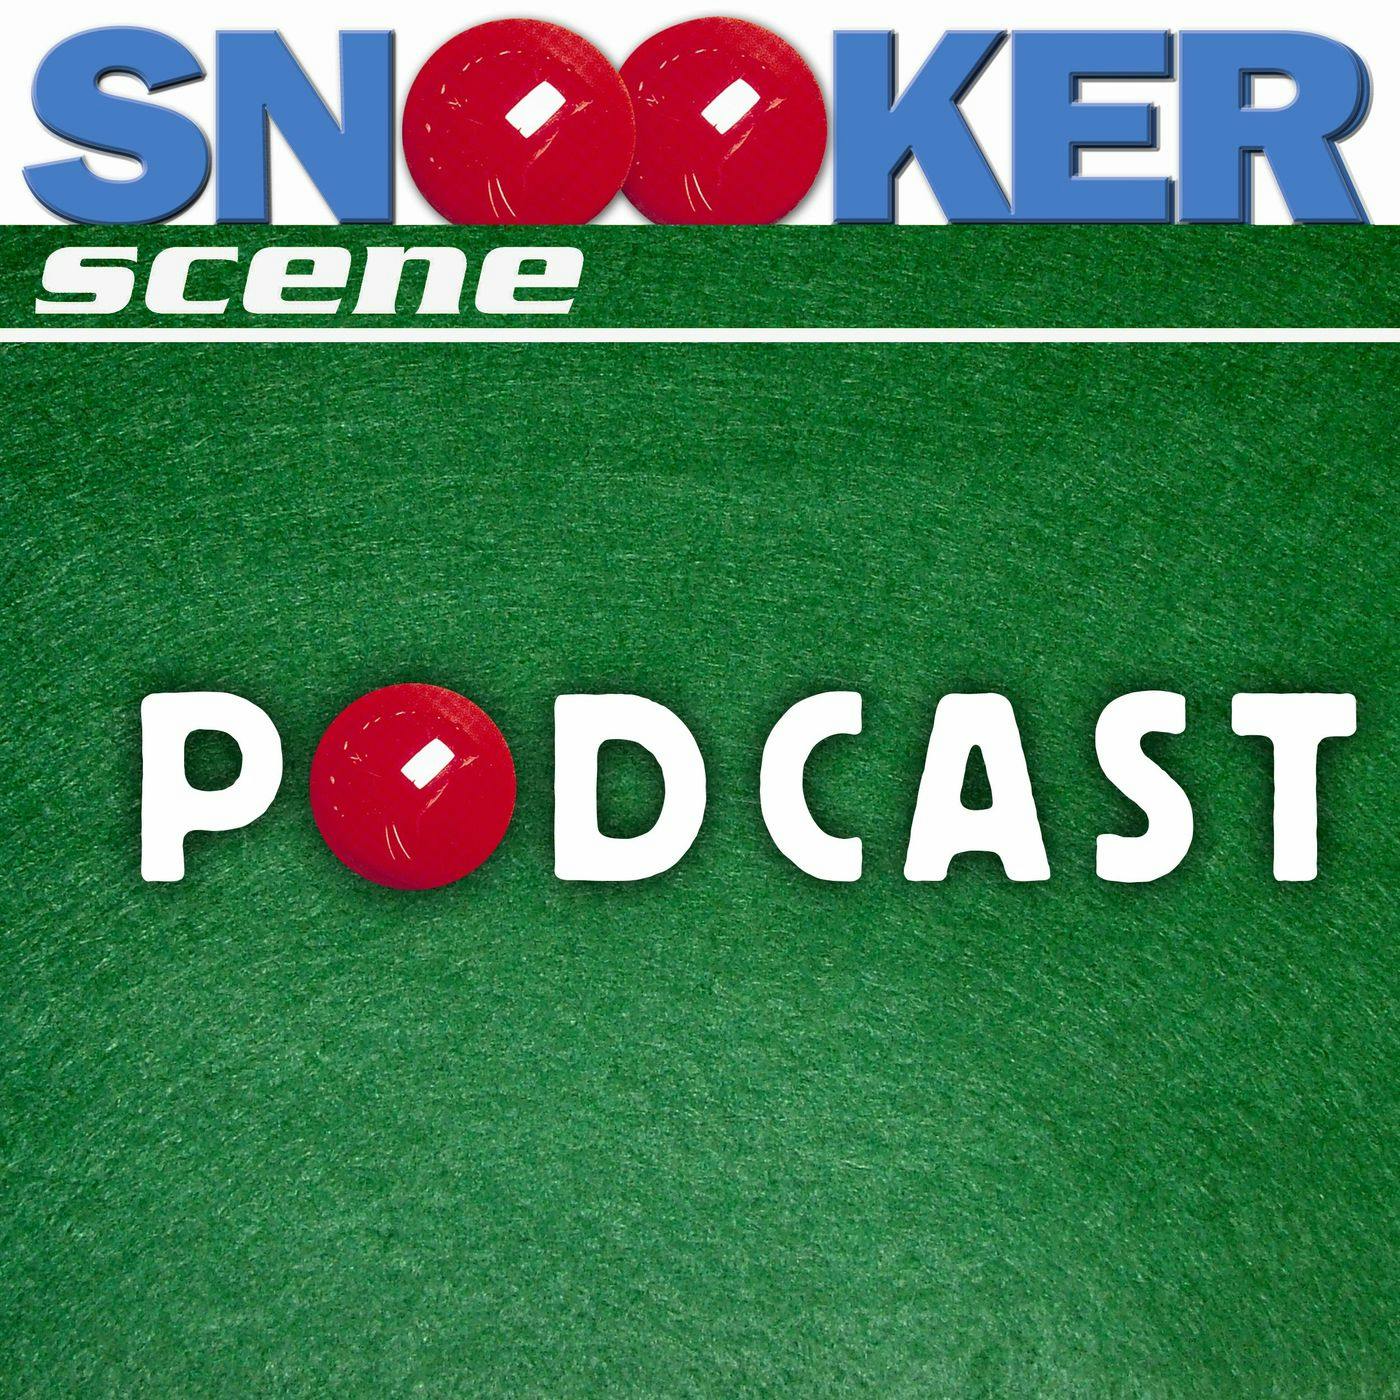 Snooker Scene Podcast episode 45 - Anthony Hamilton